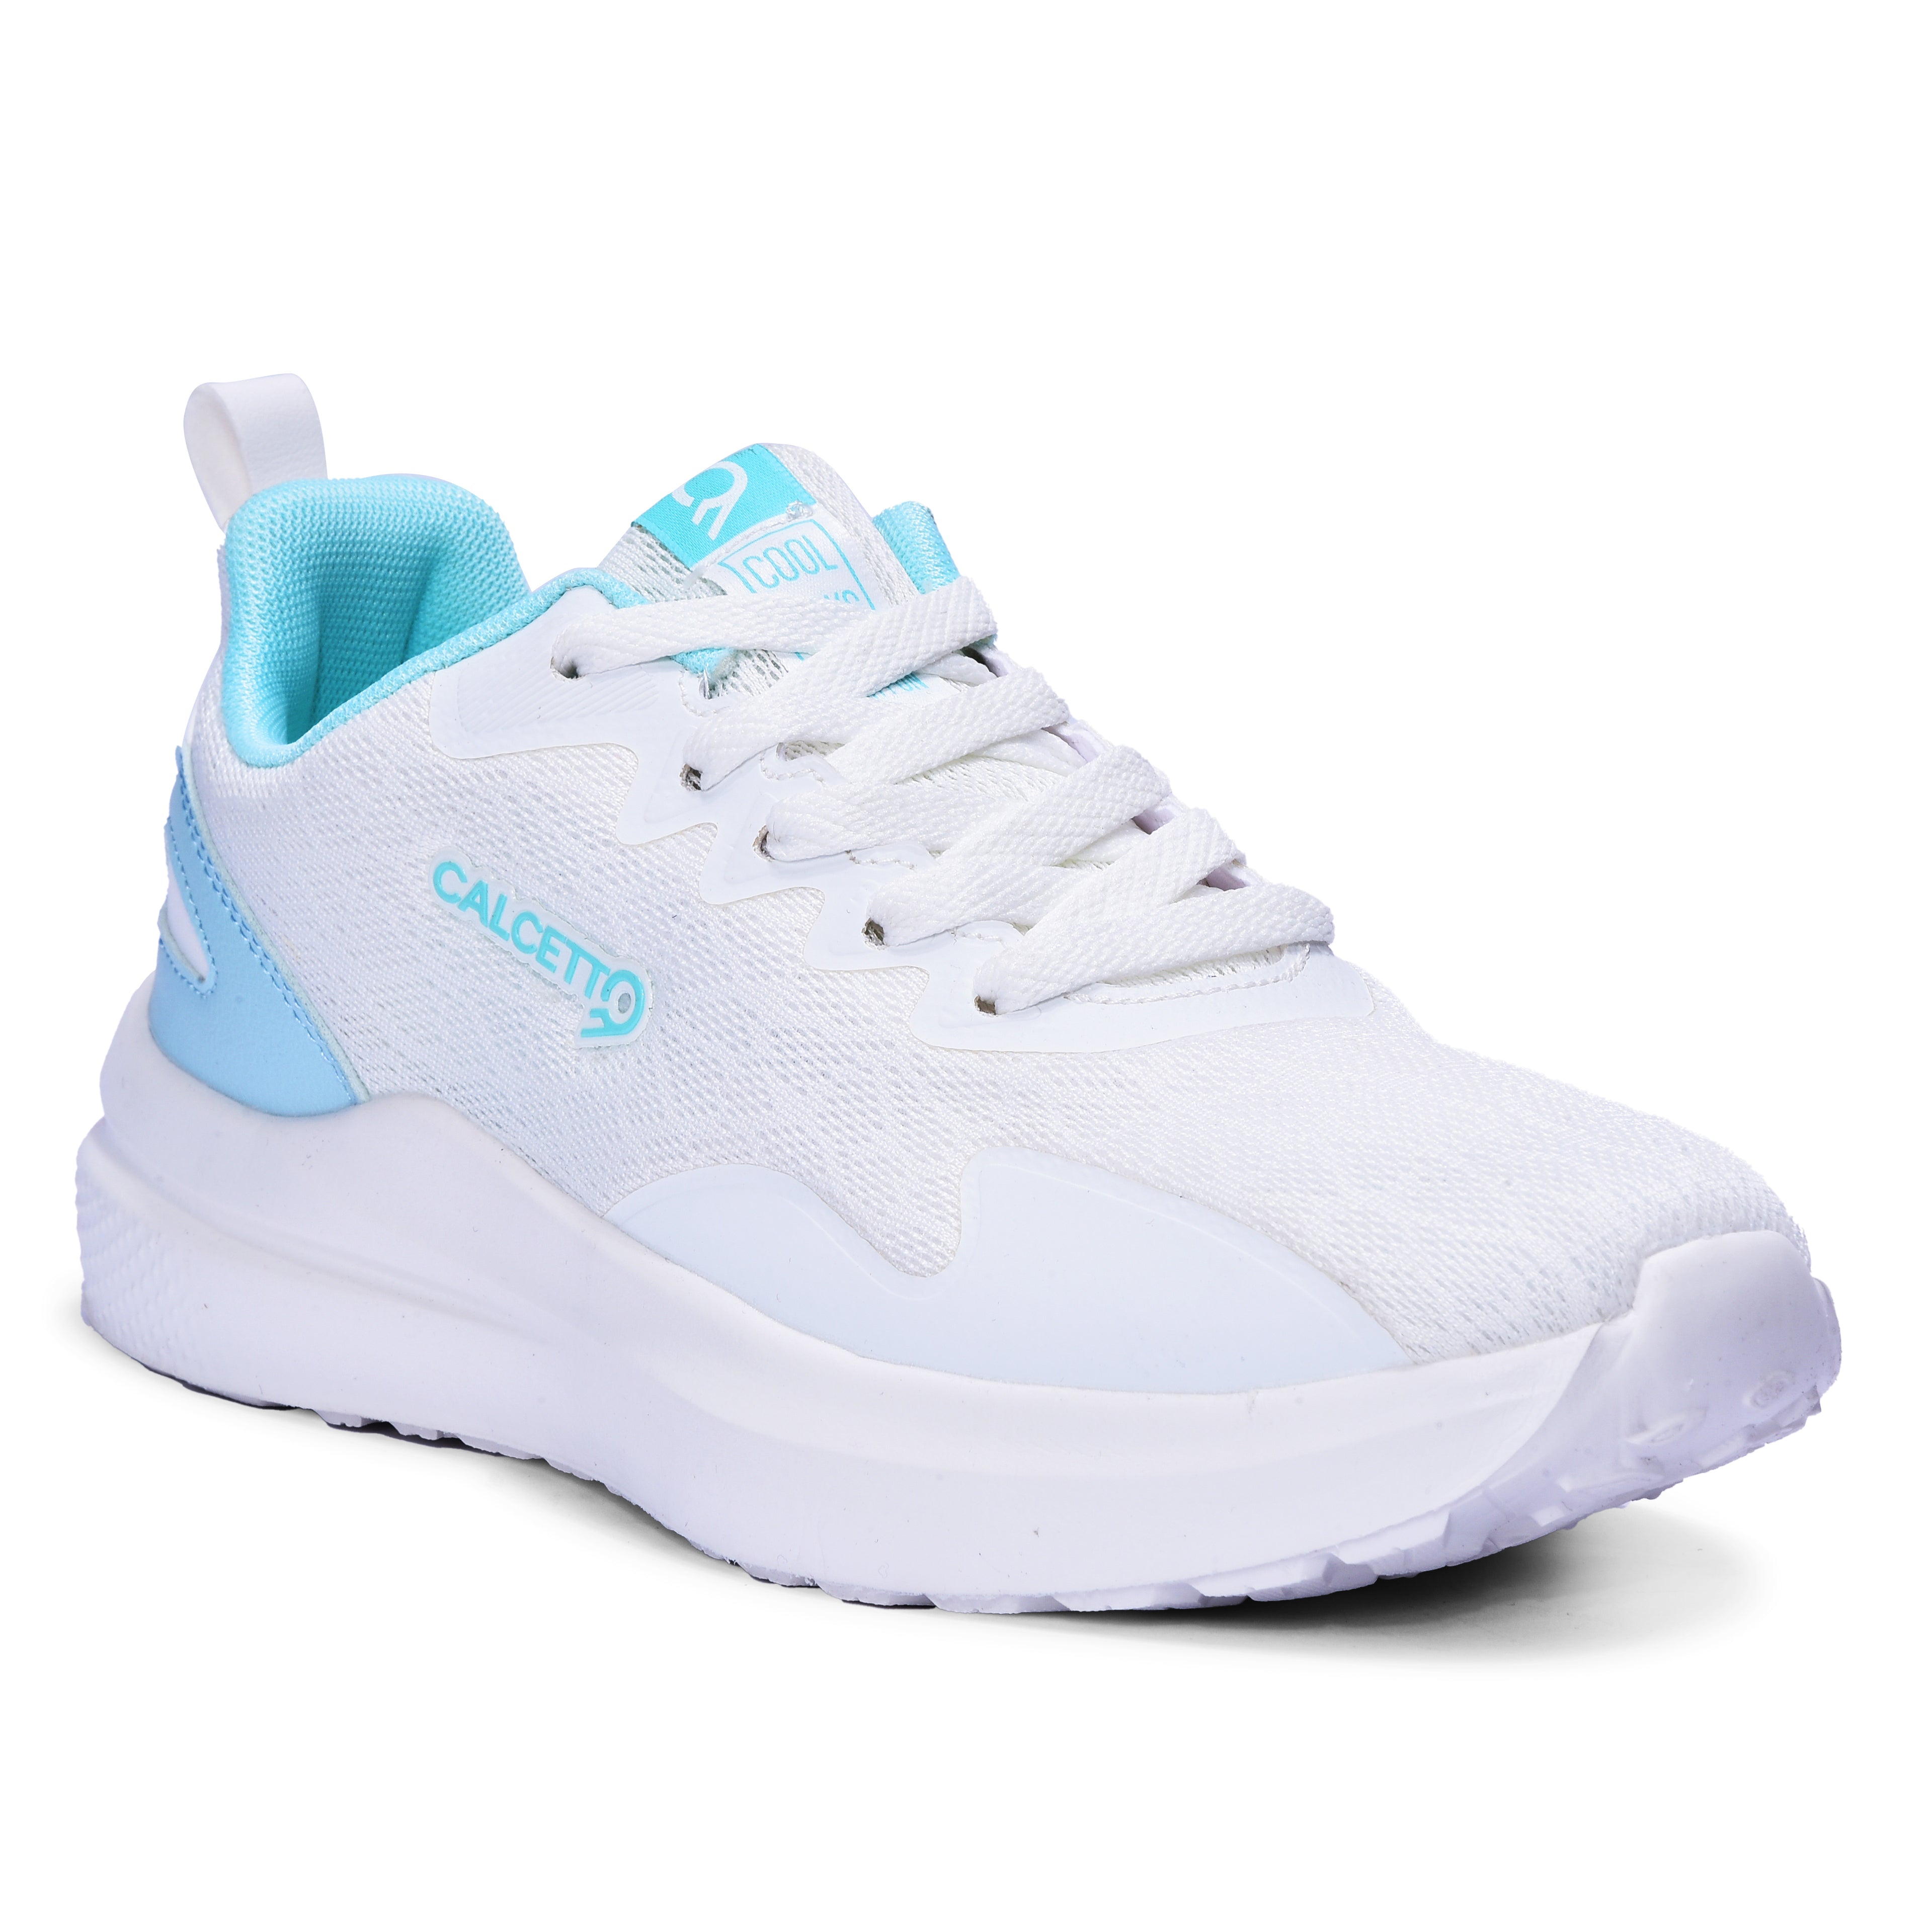 Calcetto CLT-9828 White S Green Casual Shoe For Women